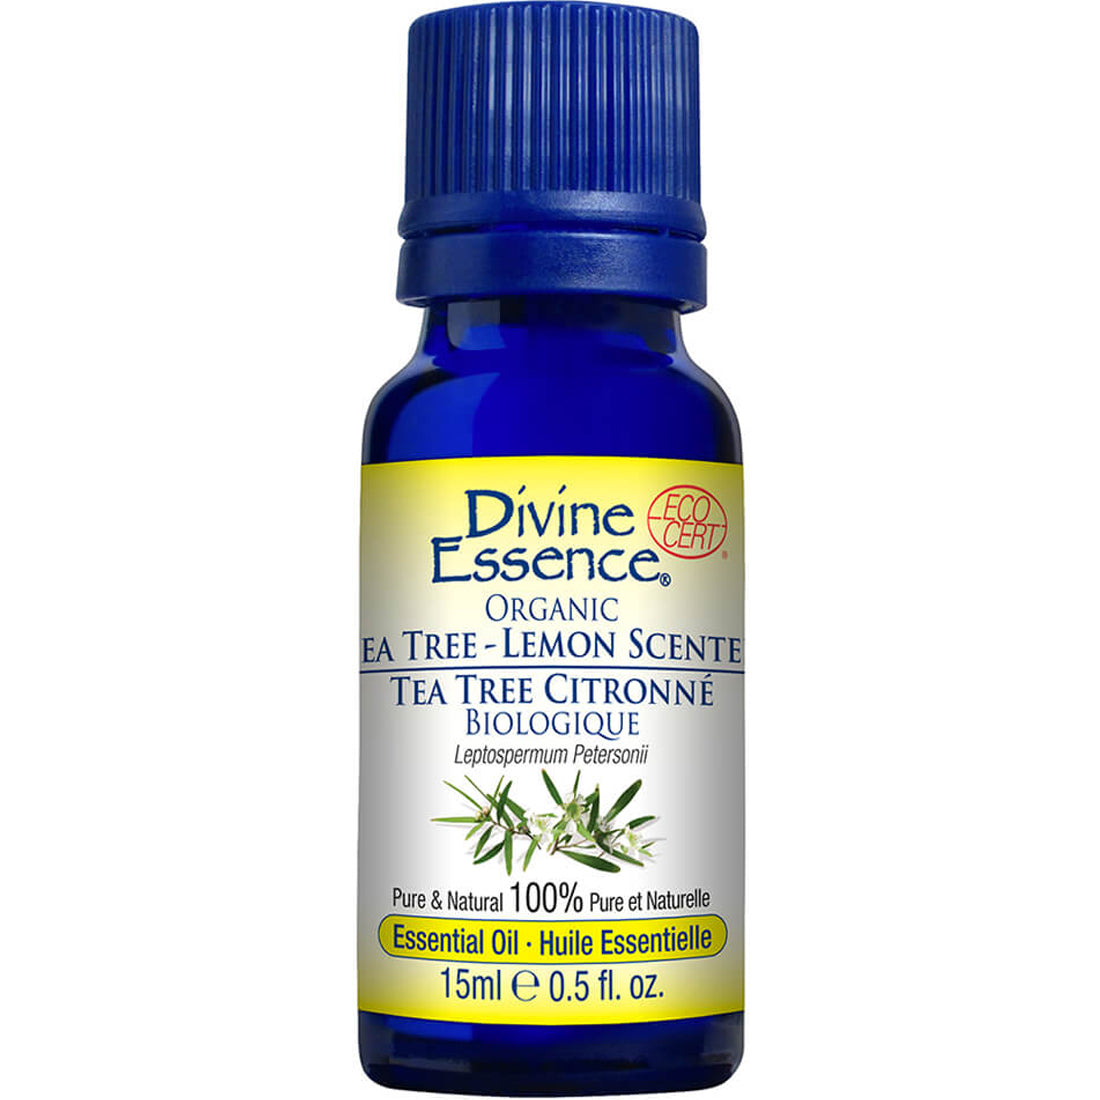 Divine Essence Tea Tree  Lemon Scented, Organic, 15ml